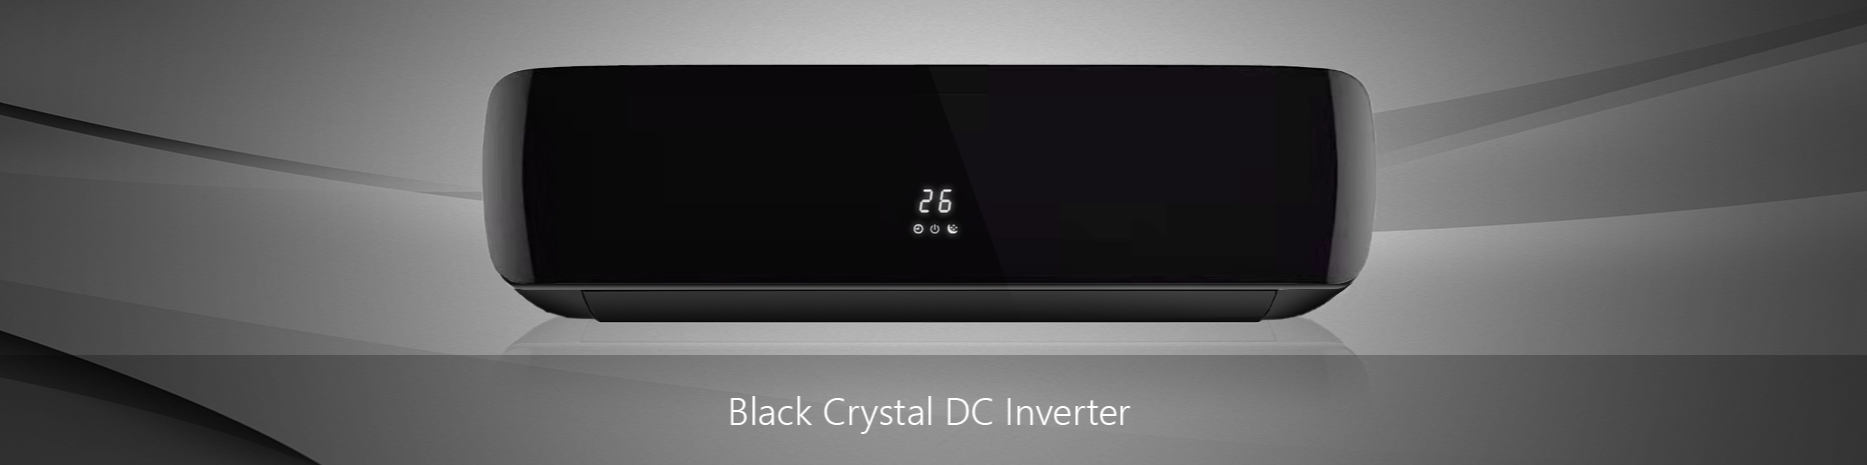 Hisense BLACK CRYSTAL DC Inverter